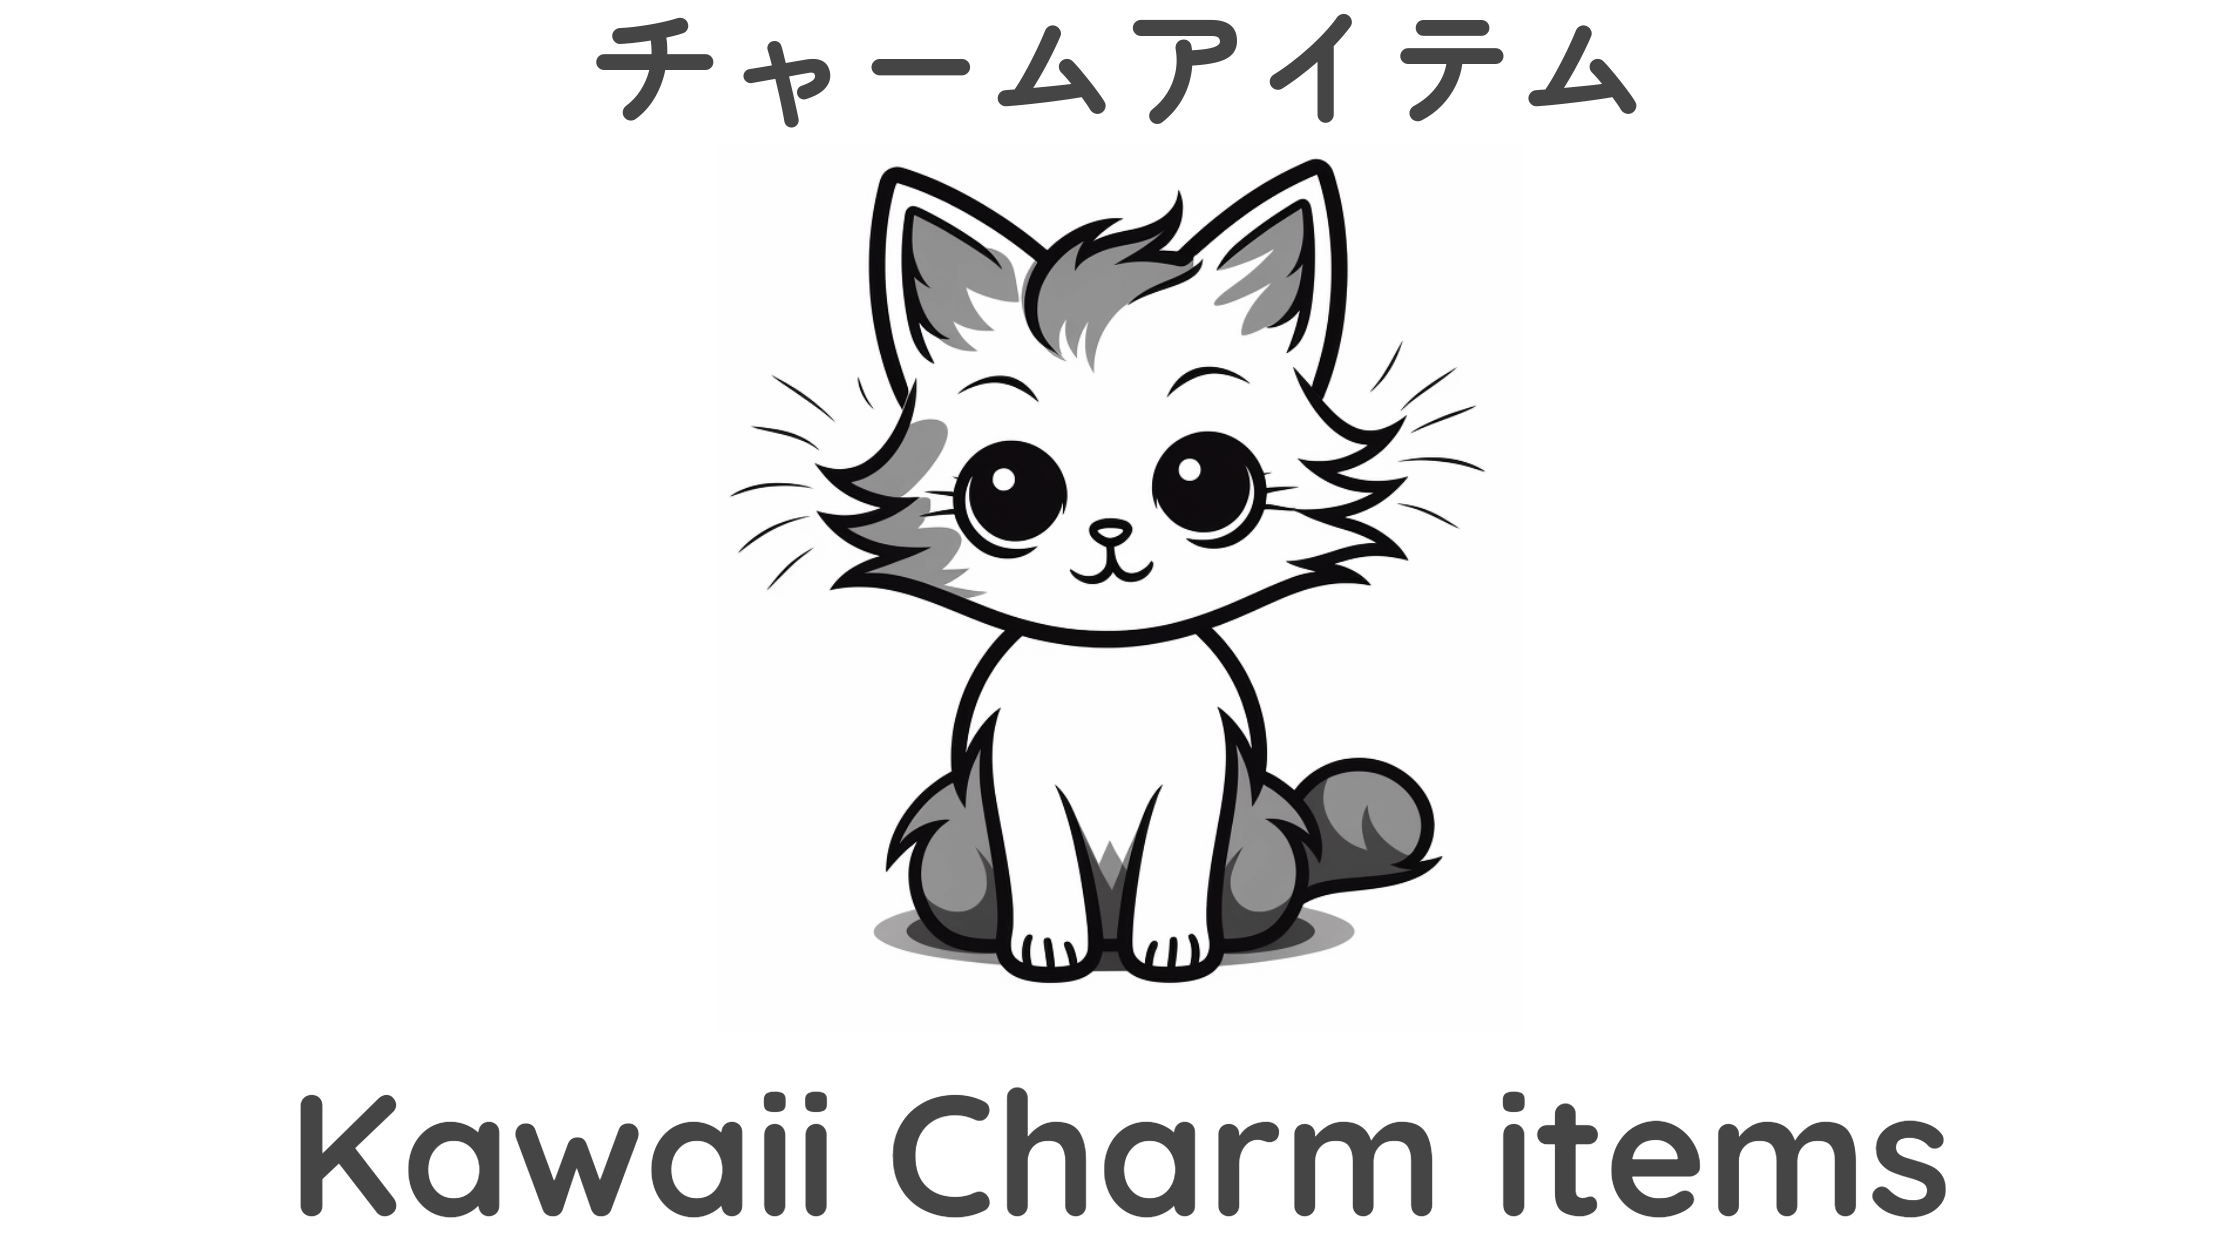 Kawaii Charm items